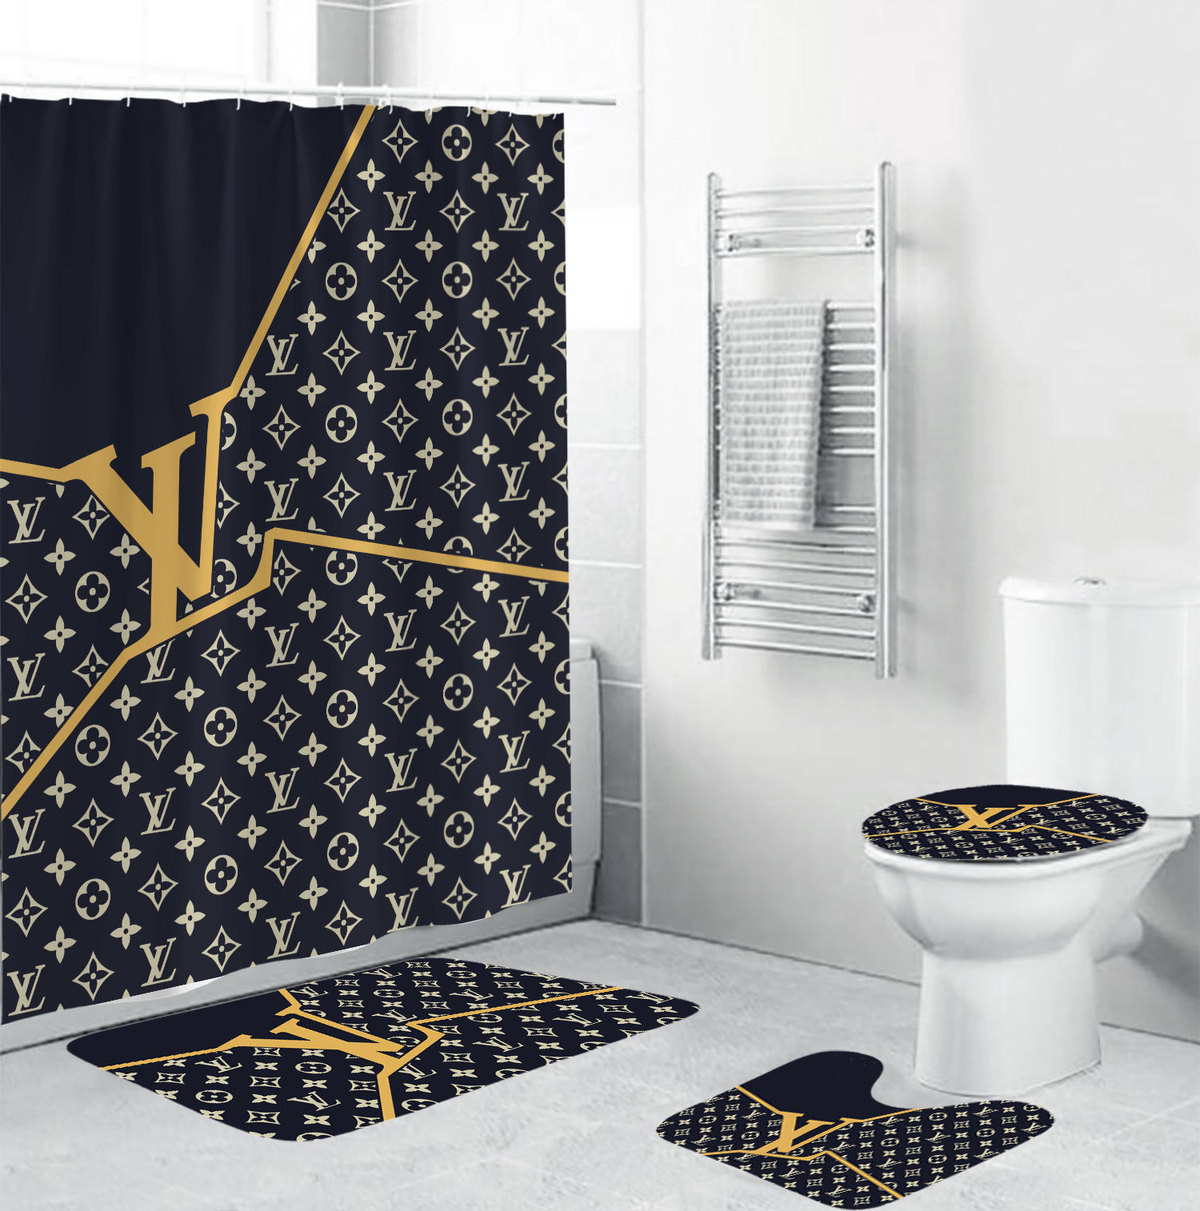 Luxury Brand High-end Bathroom Sets Arrival 9065